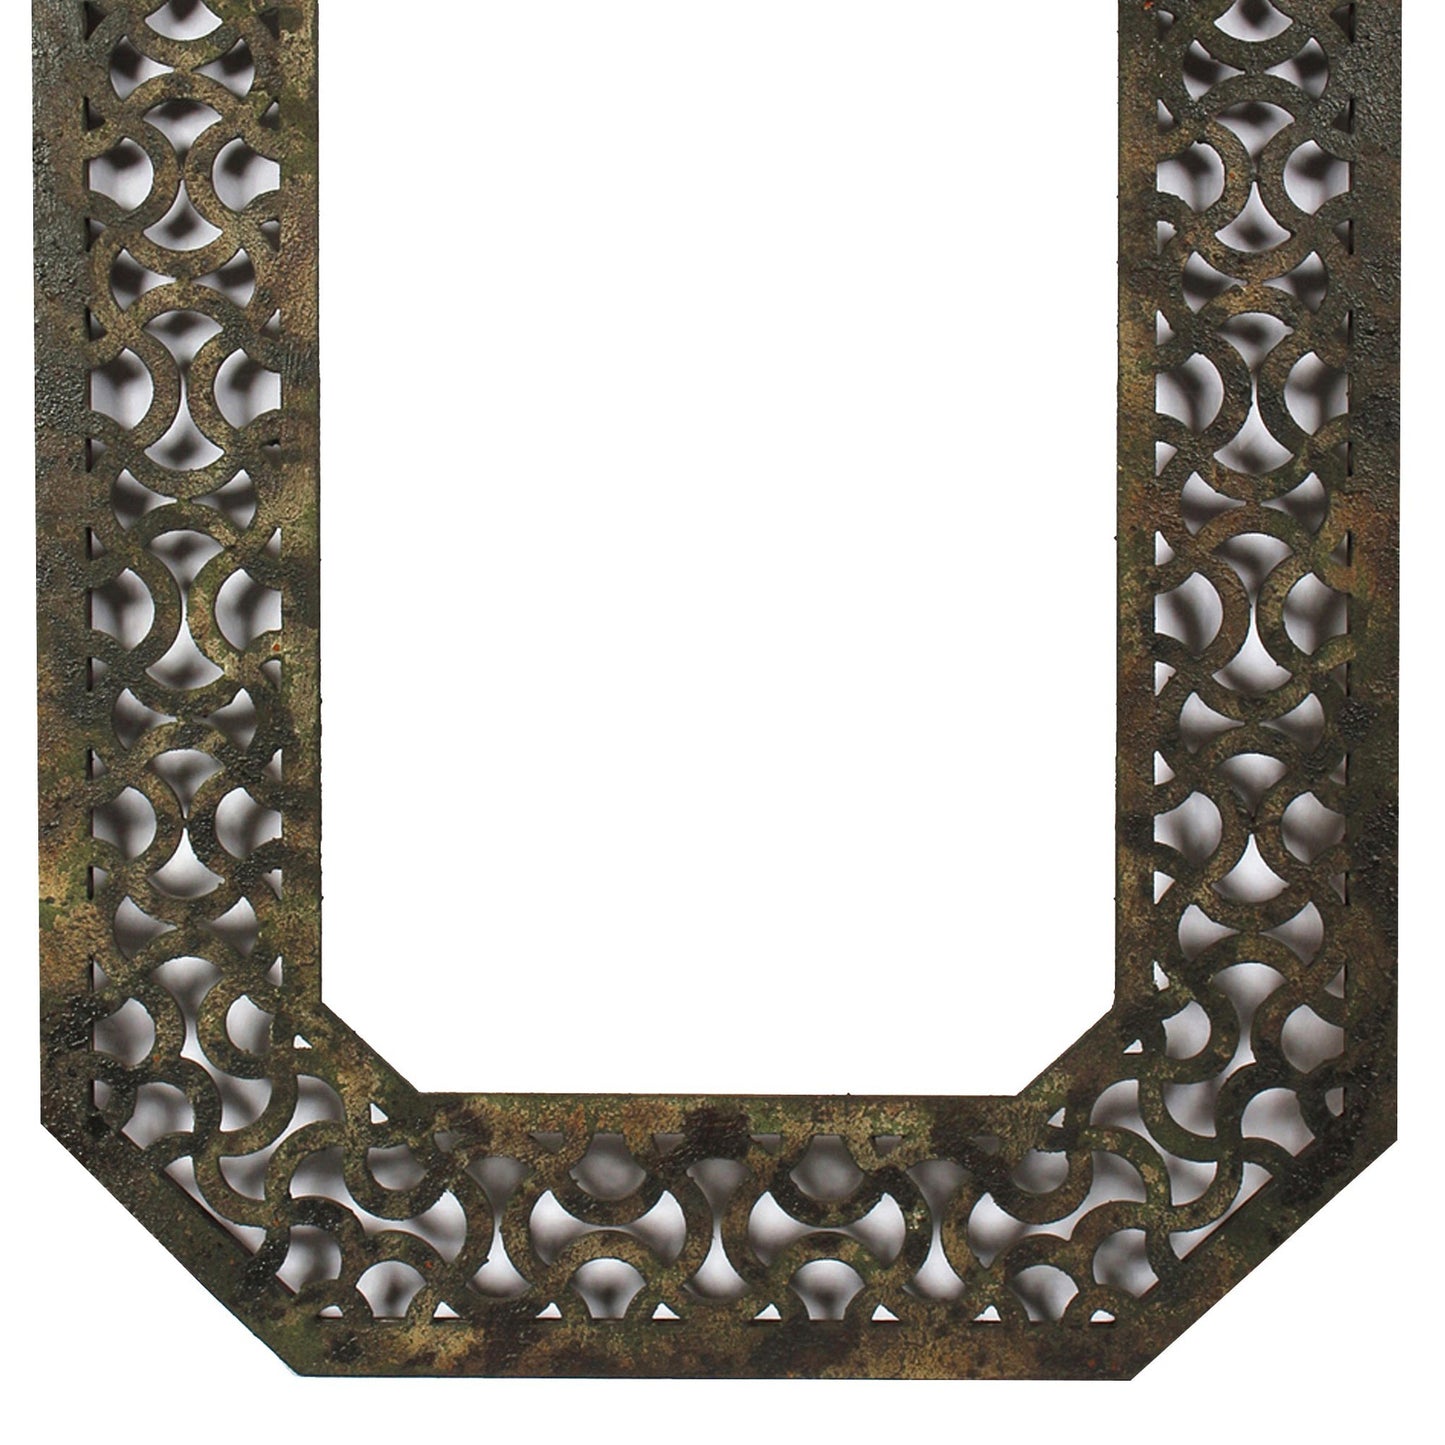 Benzara Bronze Octagonal Wooden Mirror With Distressed Finish and Bezel Pattern